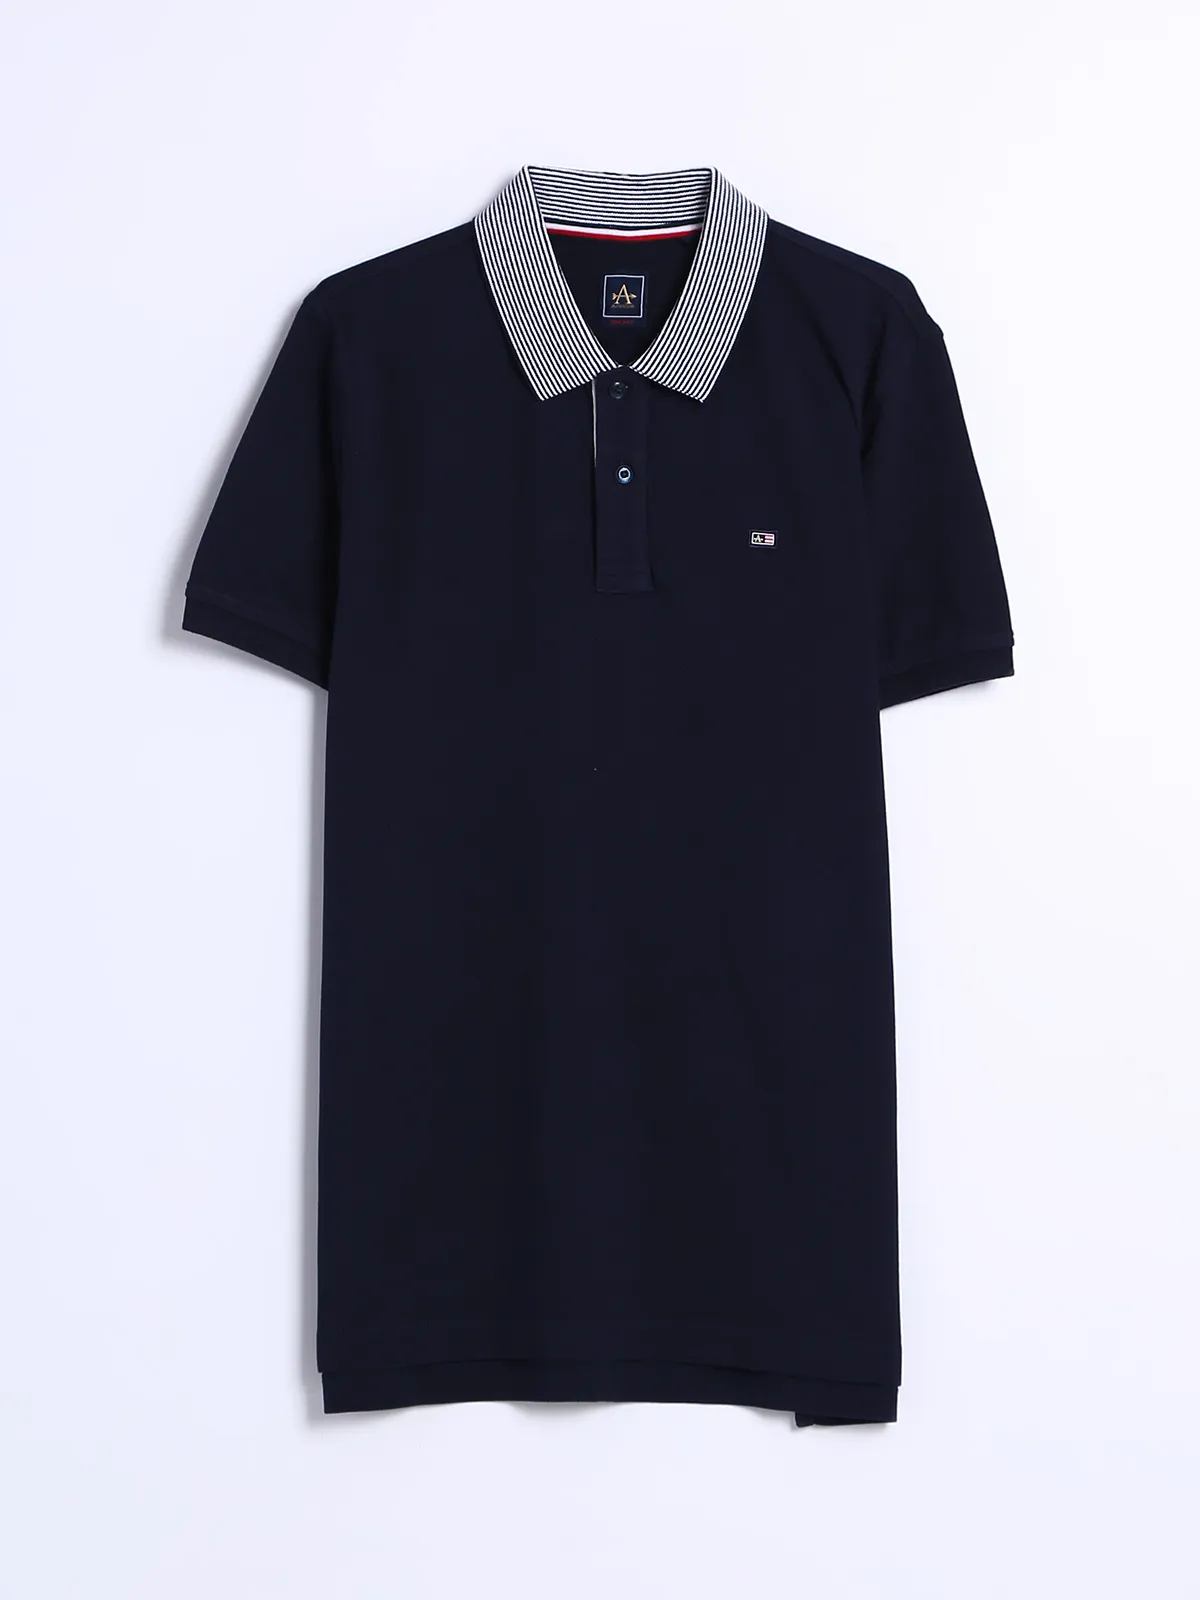 Arrow plain navy cotton polo t shirt